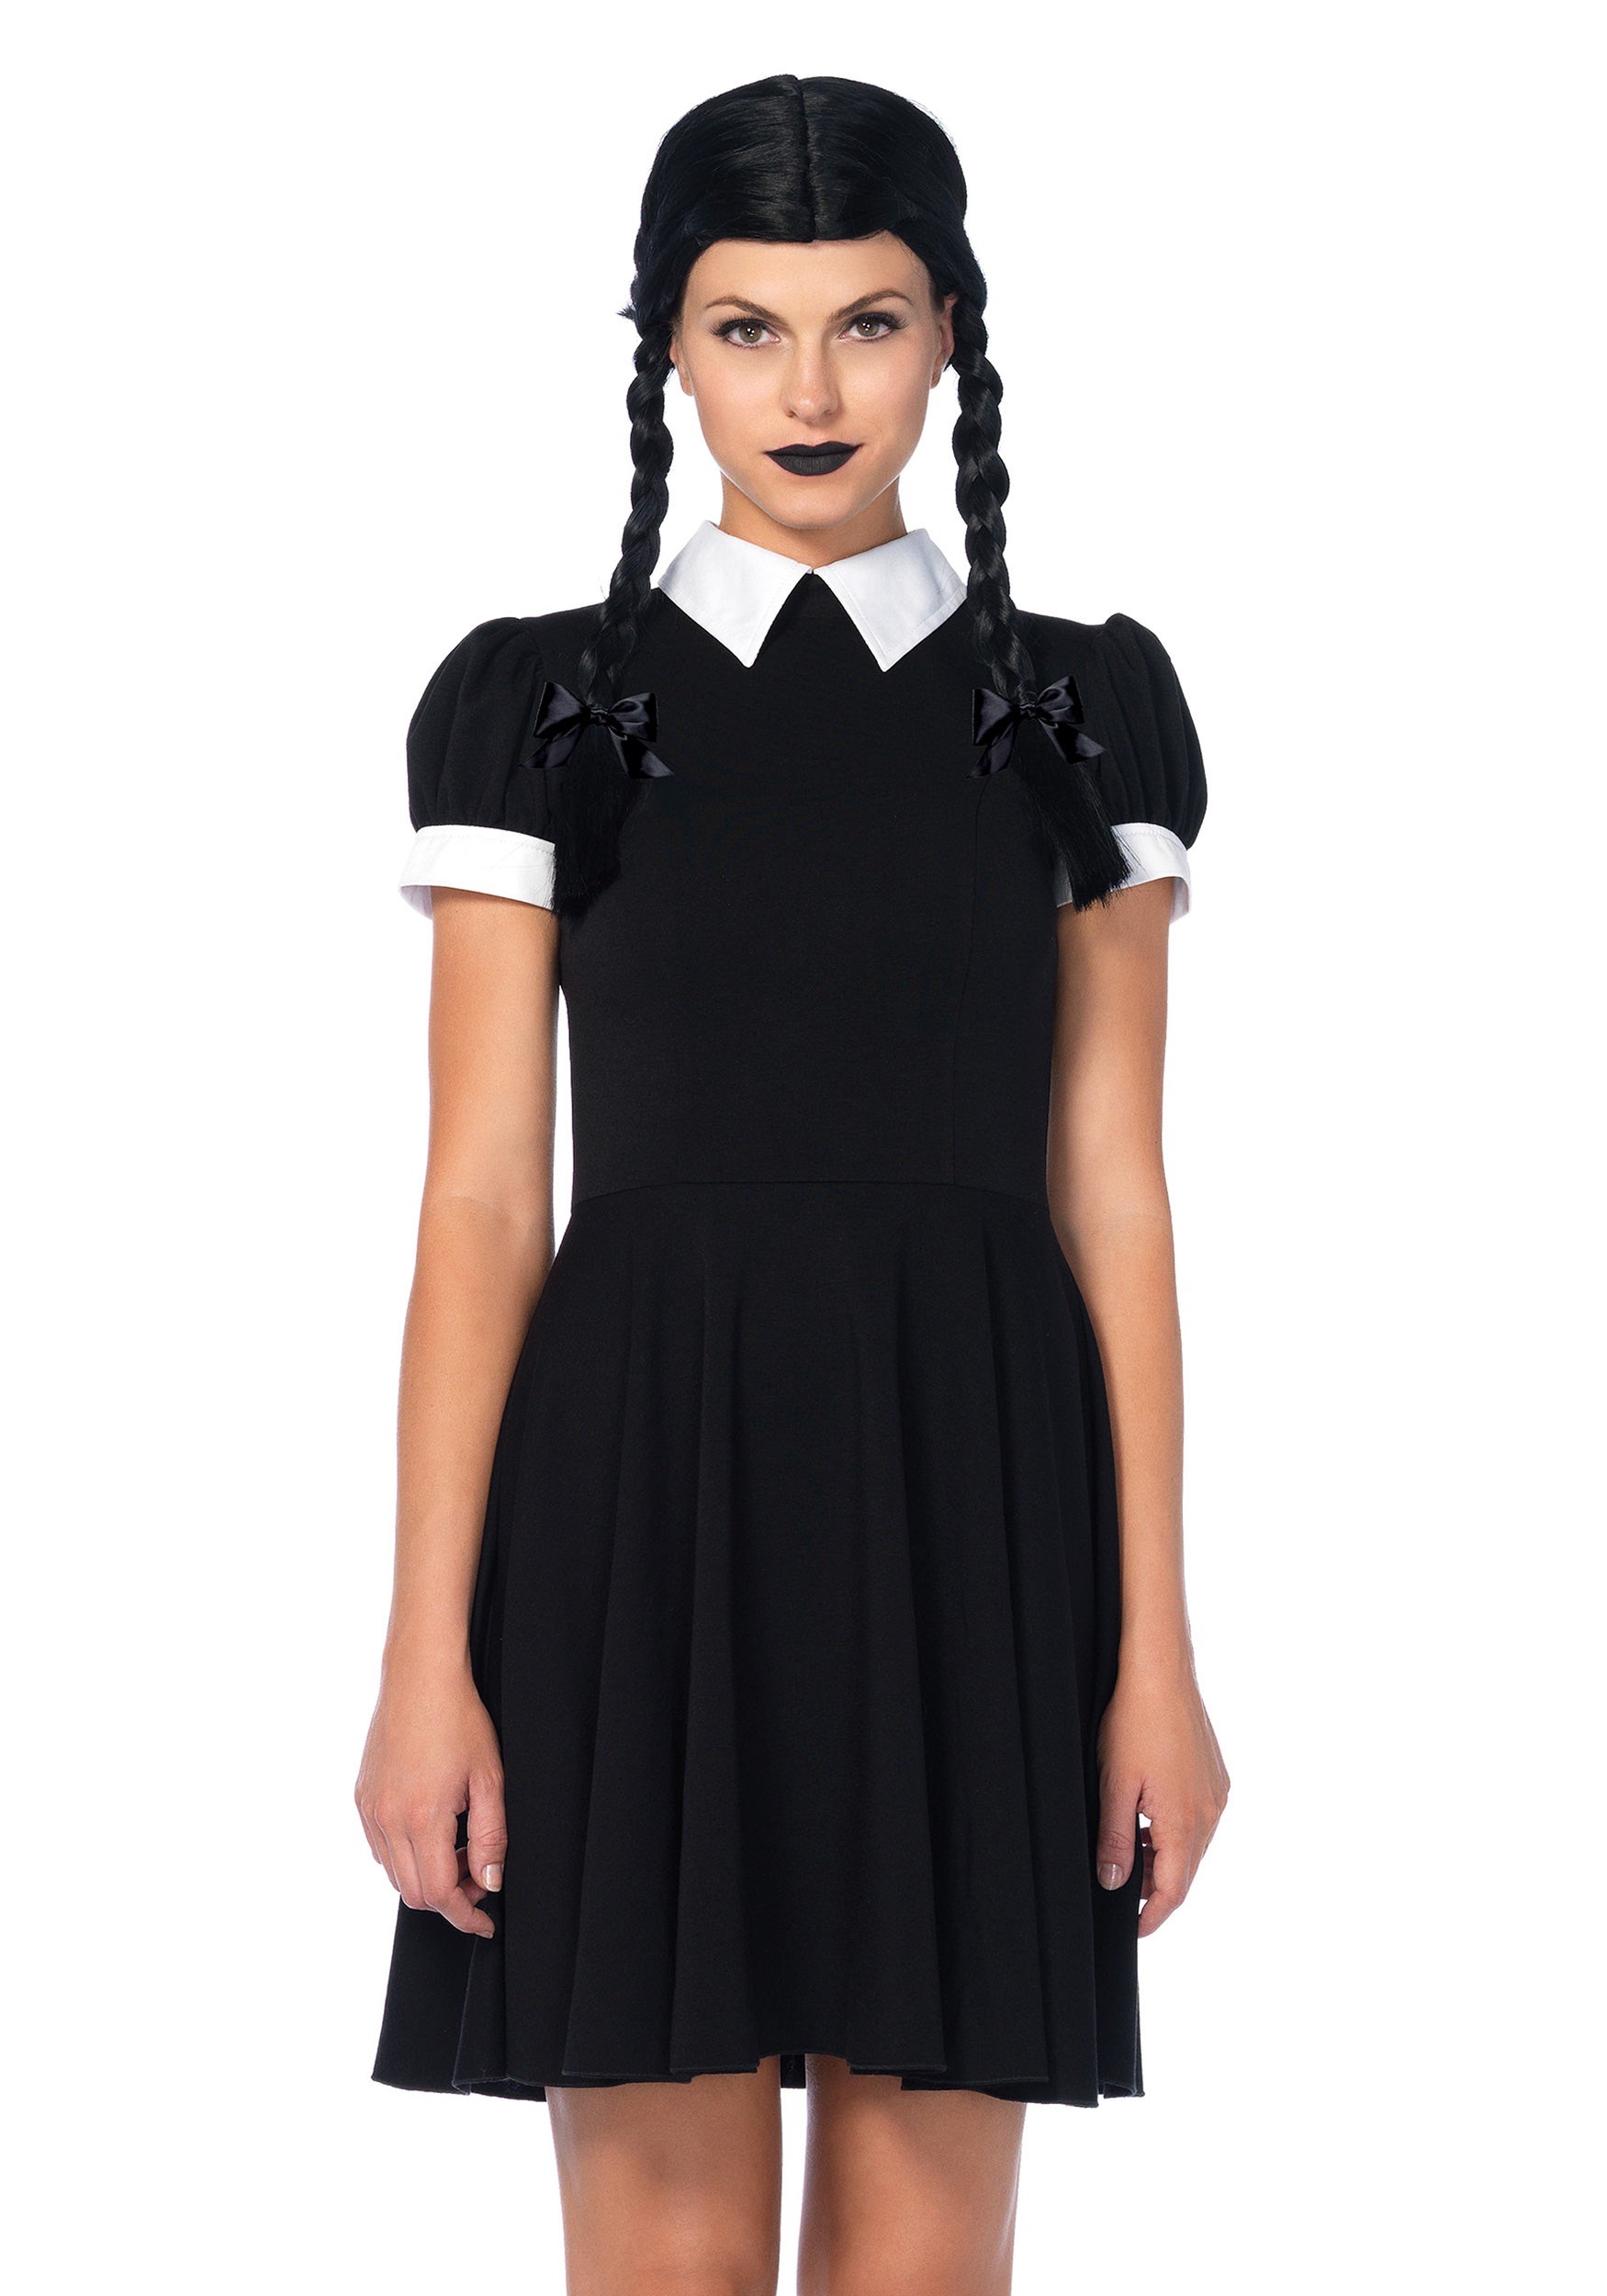 Gothic Darling Womens Fancy Dress Costume